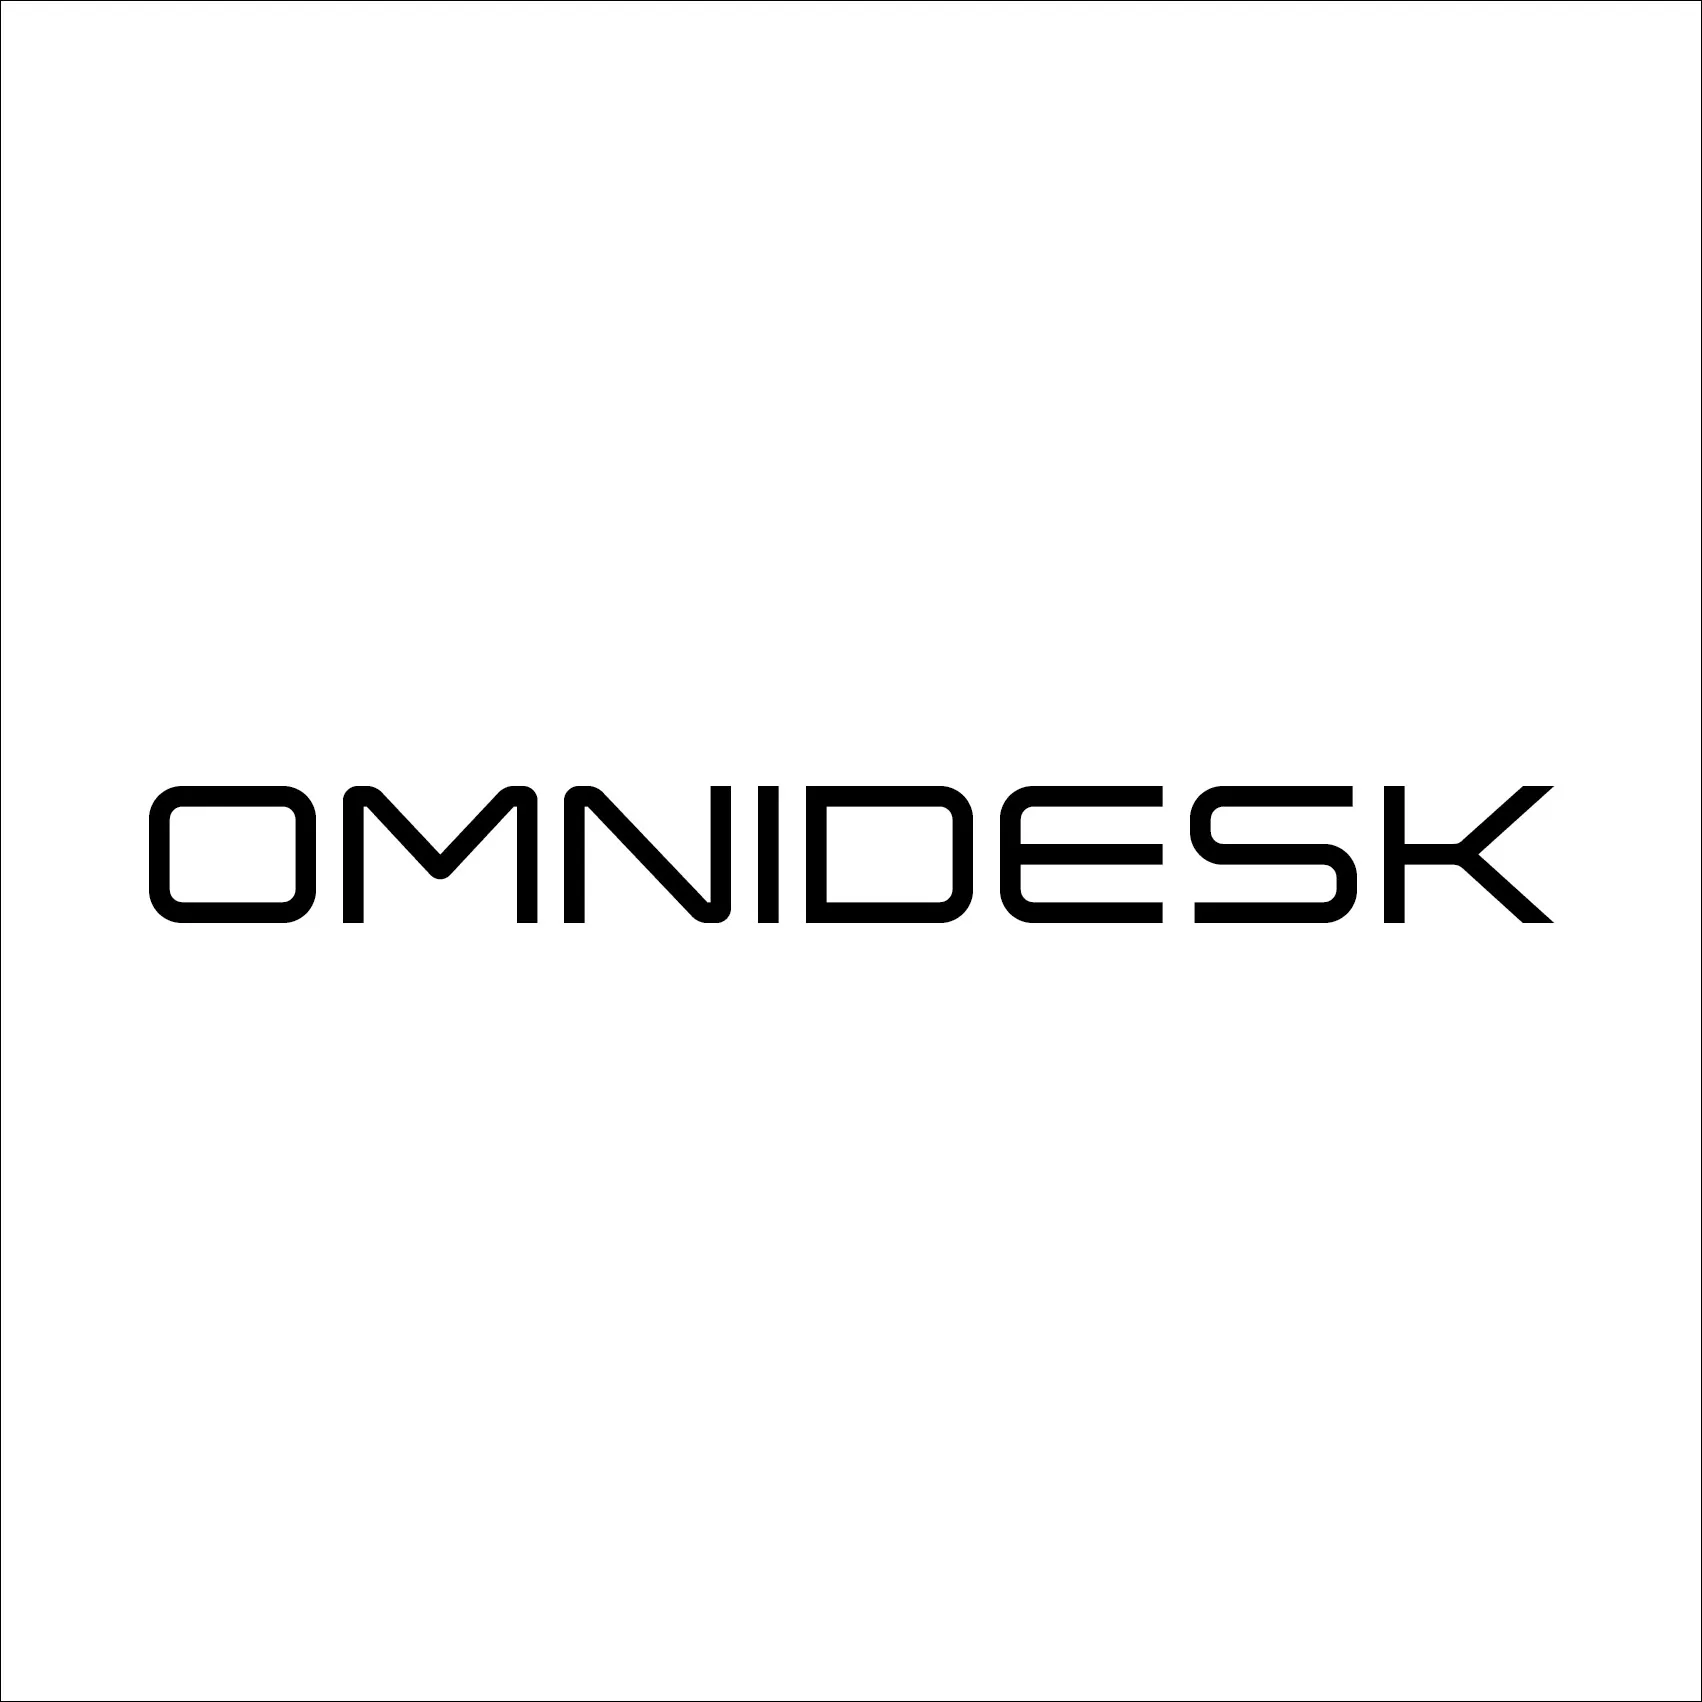 Omni desk logo click to view partner page